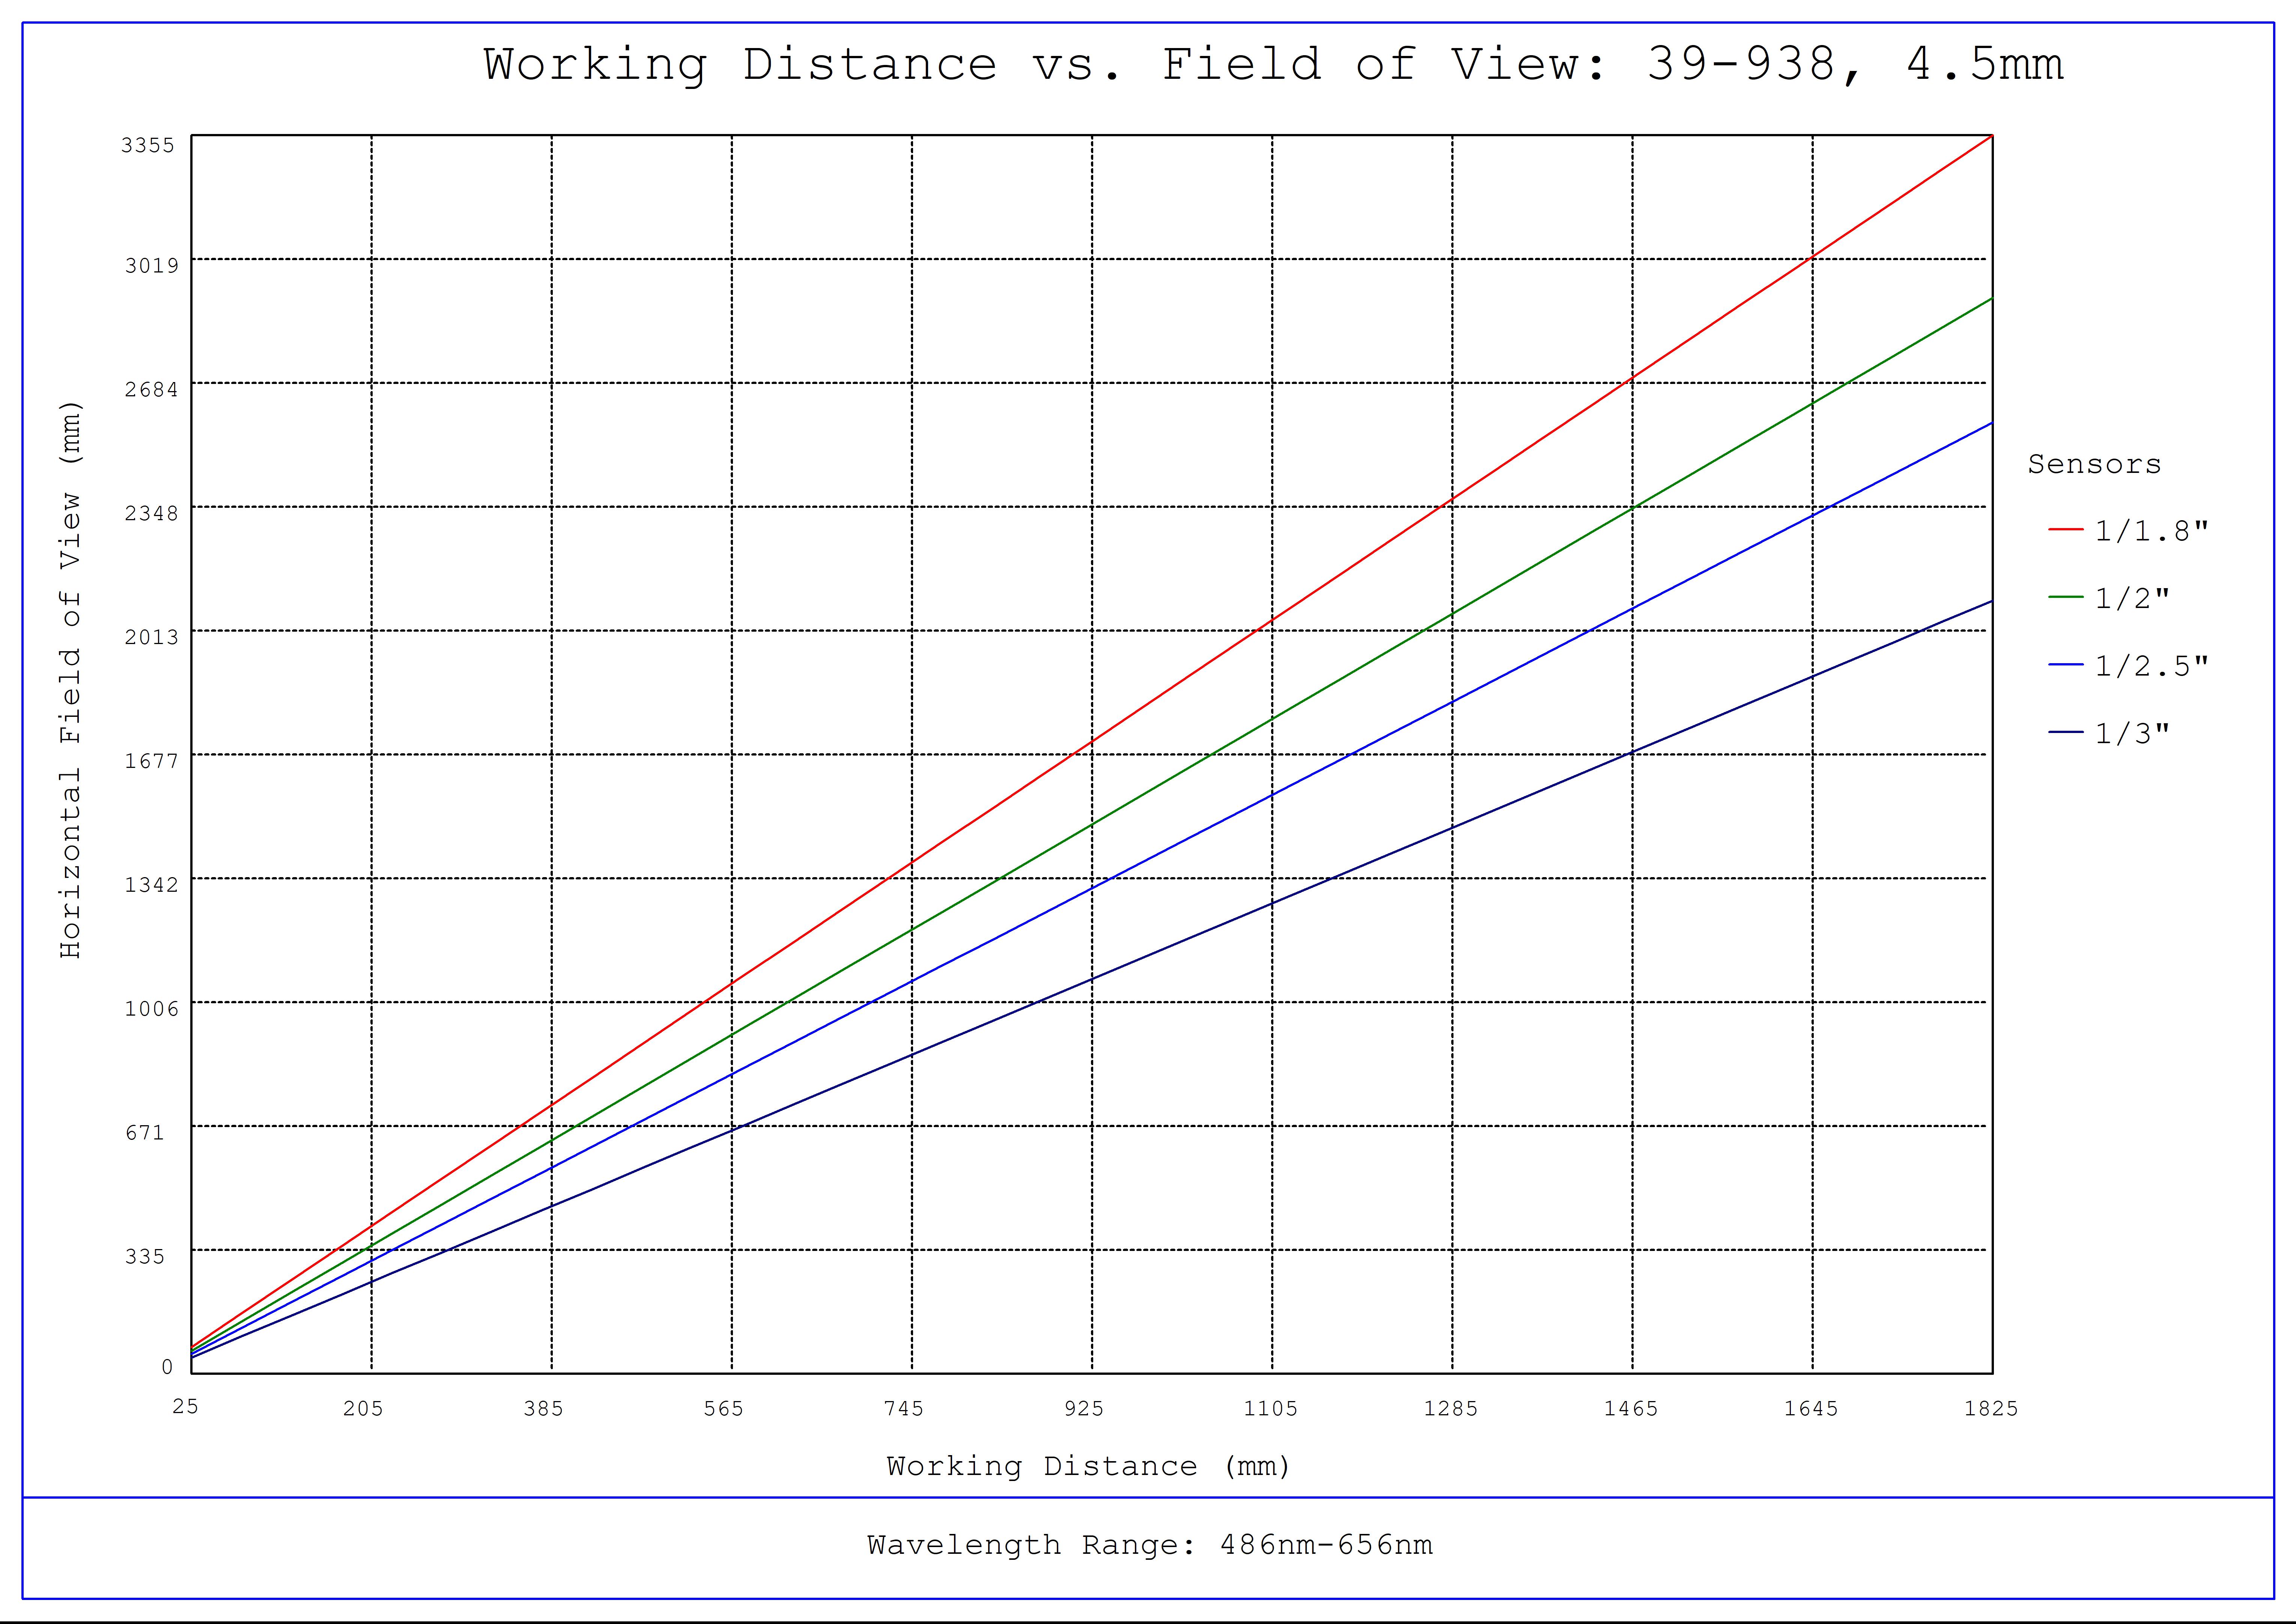 #39-938, 4.5mm C VIS-NIR Series Fixed Focal Length Lens, Working Distance versus Field of View Plot